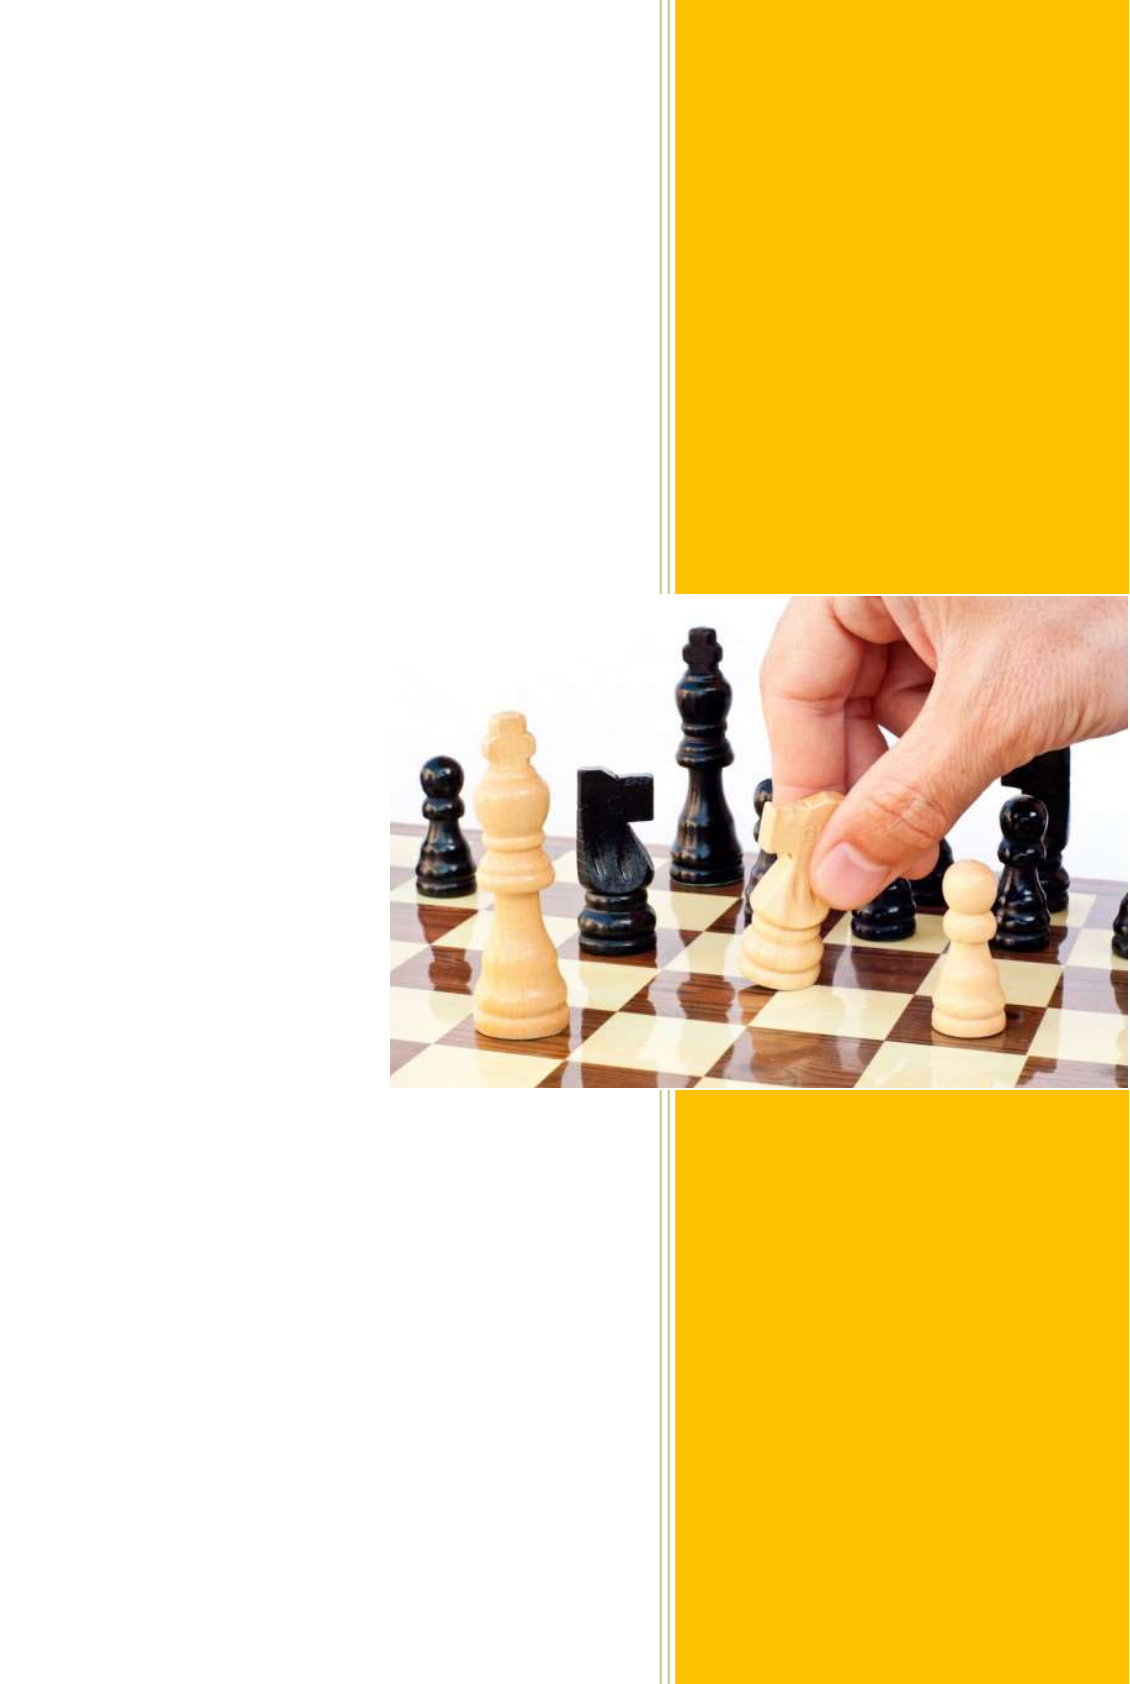 Xadrez na escola: jogo desenvolve competência e habilidades - EX